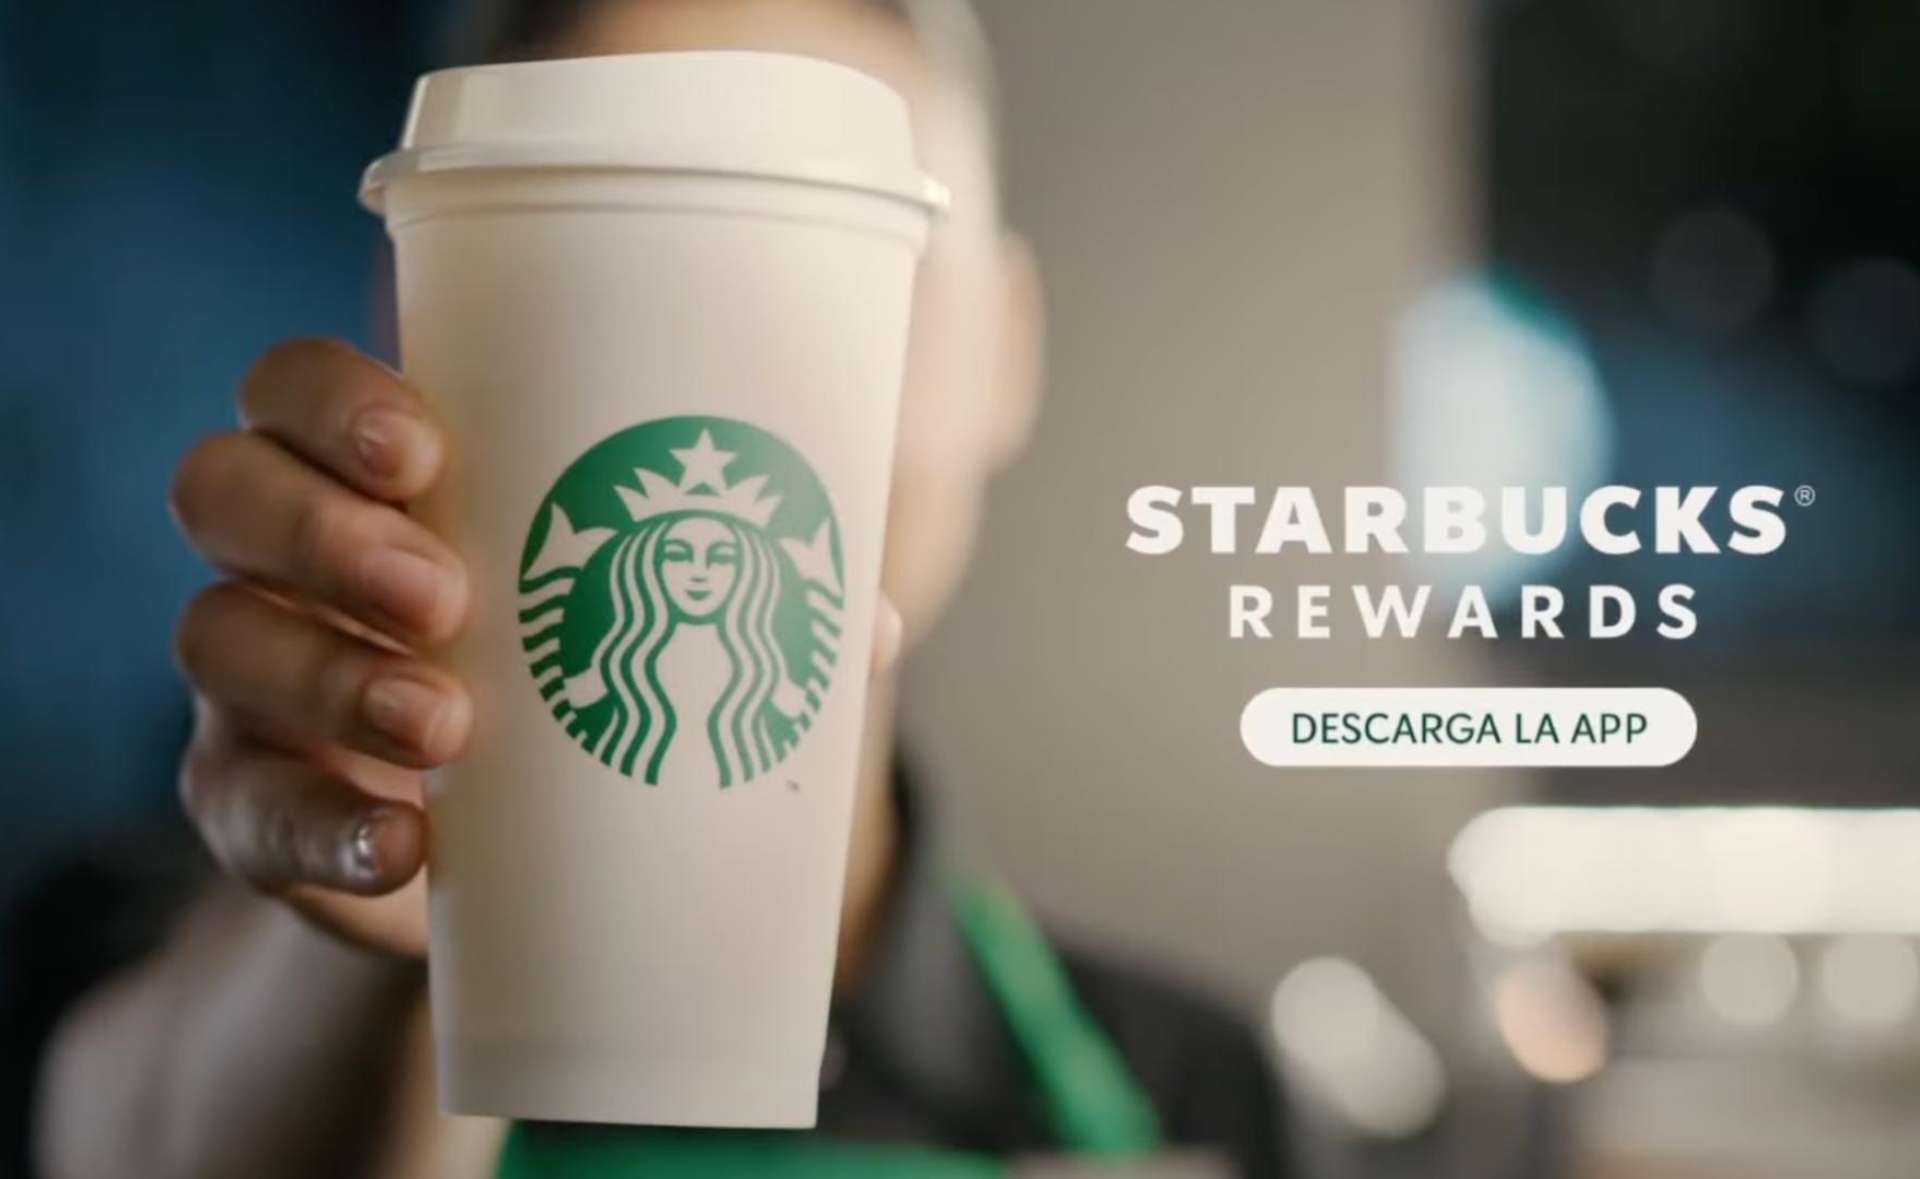 Starbucks rewards